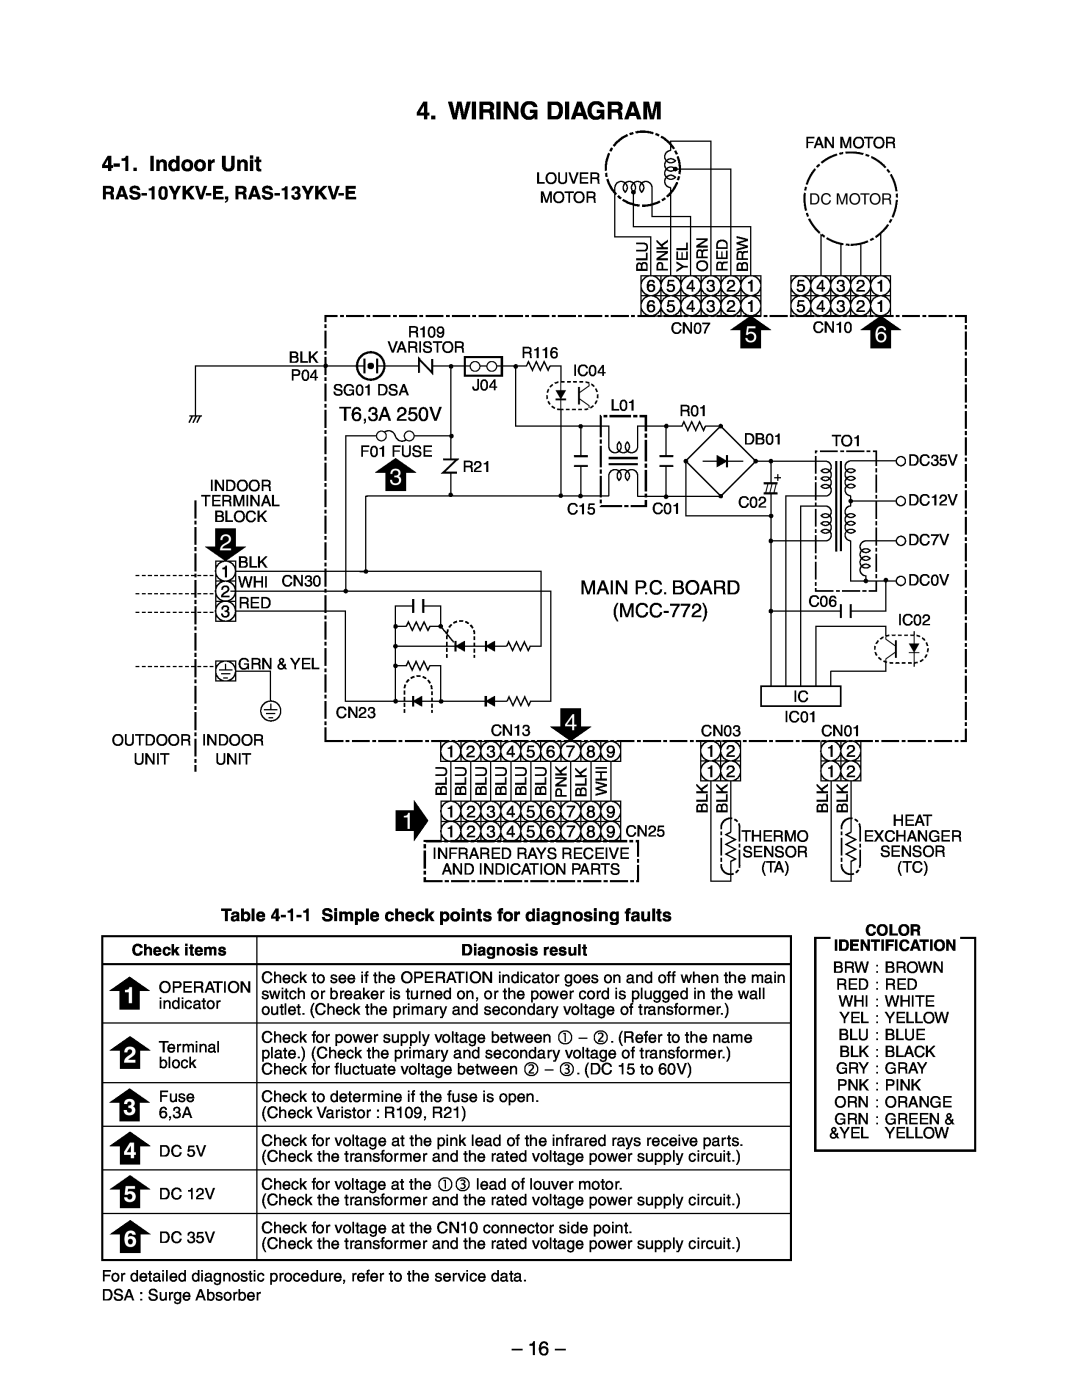 Toshiba RAS-10YAV-E, RAS-13YAV-E Wiring Diagram, Indoor Unit, T6,3A, Main P.C. Board, MCC-772, RAS-10YKV-E, RAS-13YKV-E 